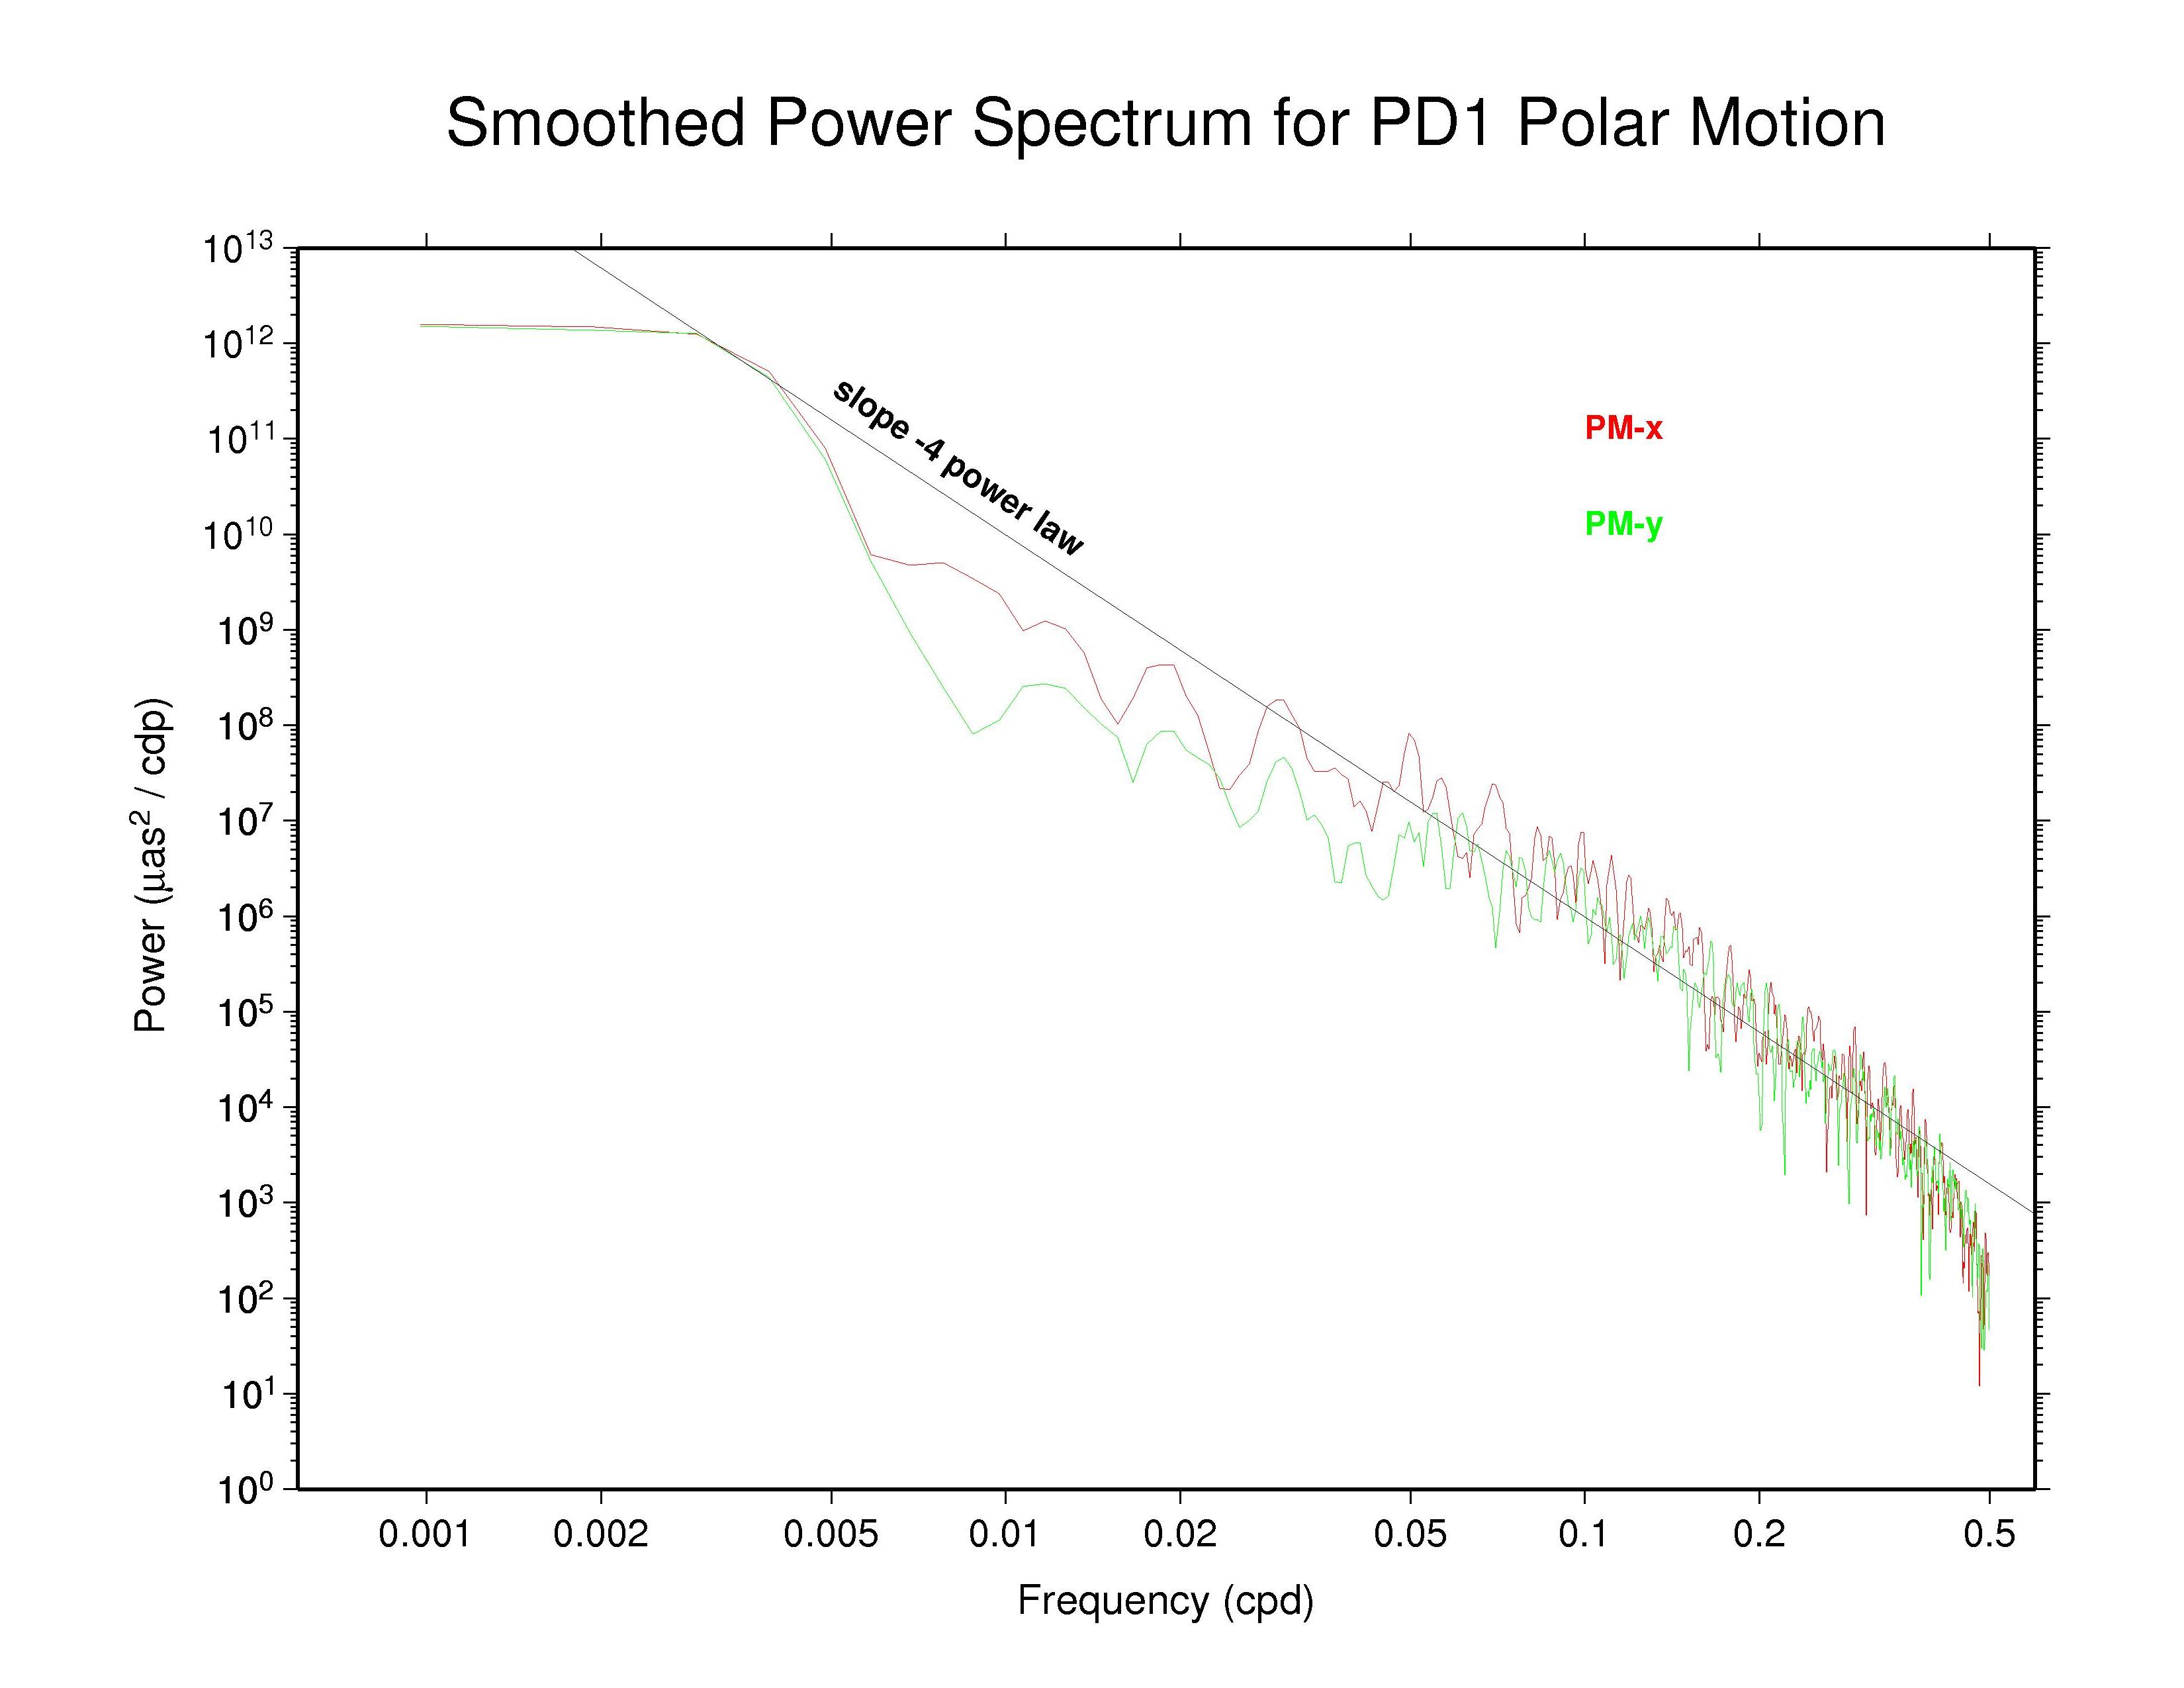 PDR polar motion spectra